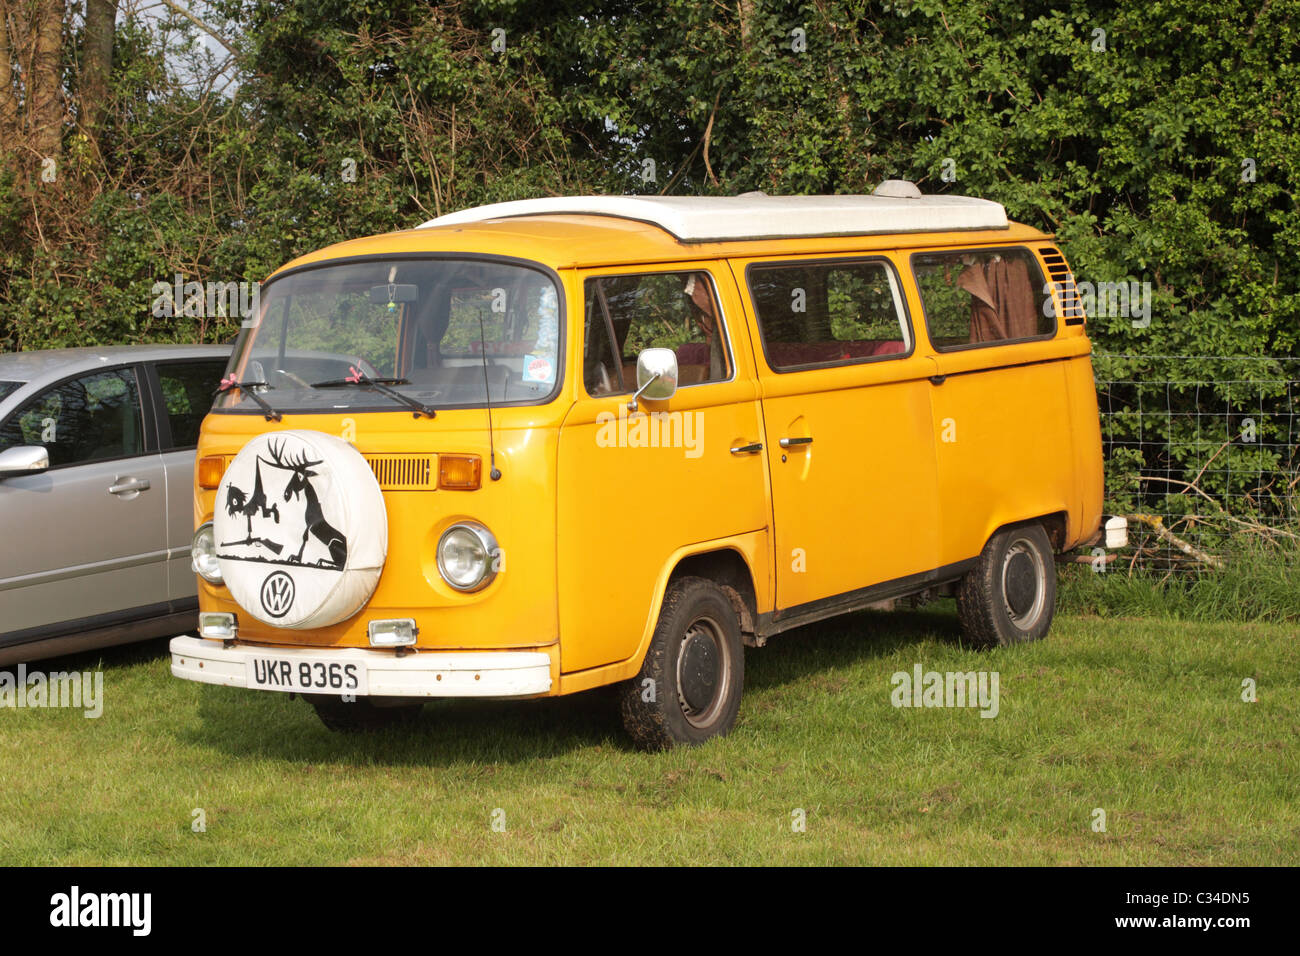 2 MTS Qualità Arancione & Marrone Tweed tappezzeria stoffa sedili VW Camper Van 